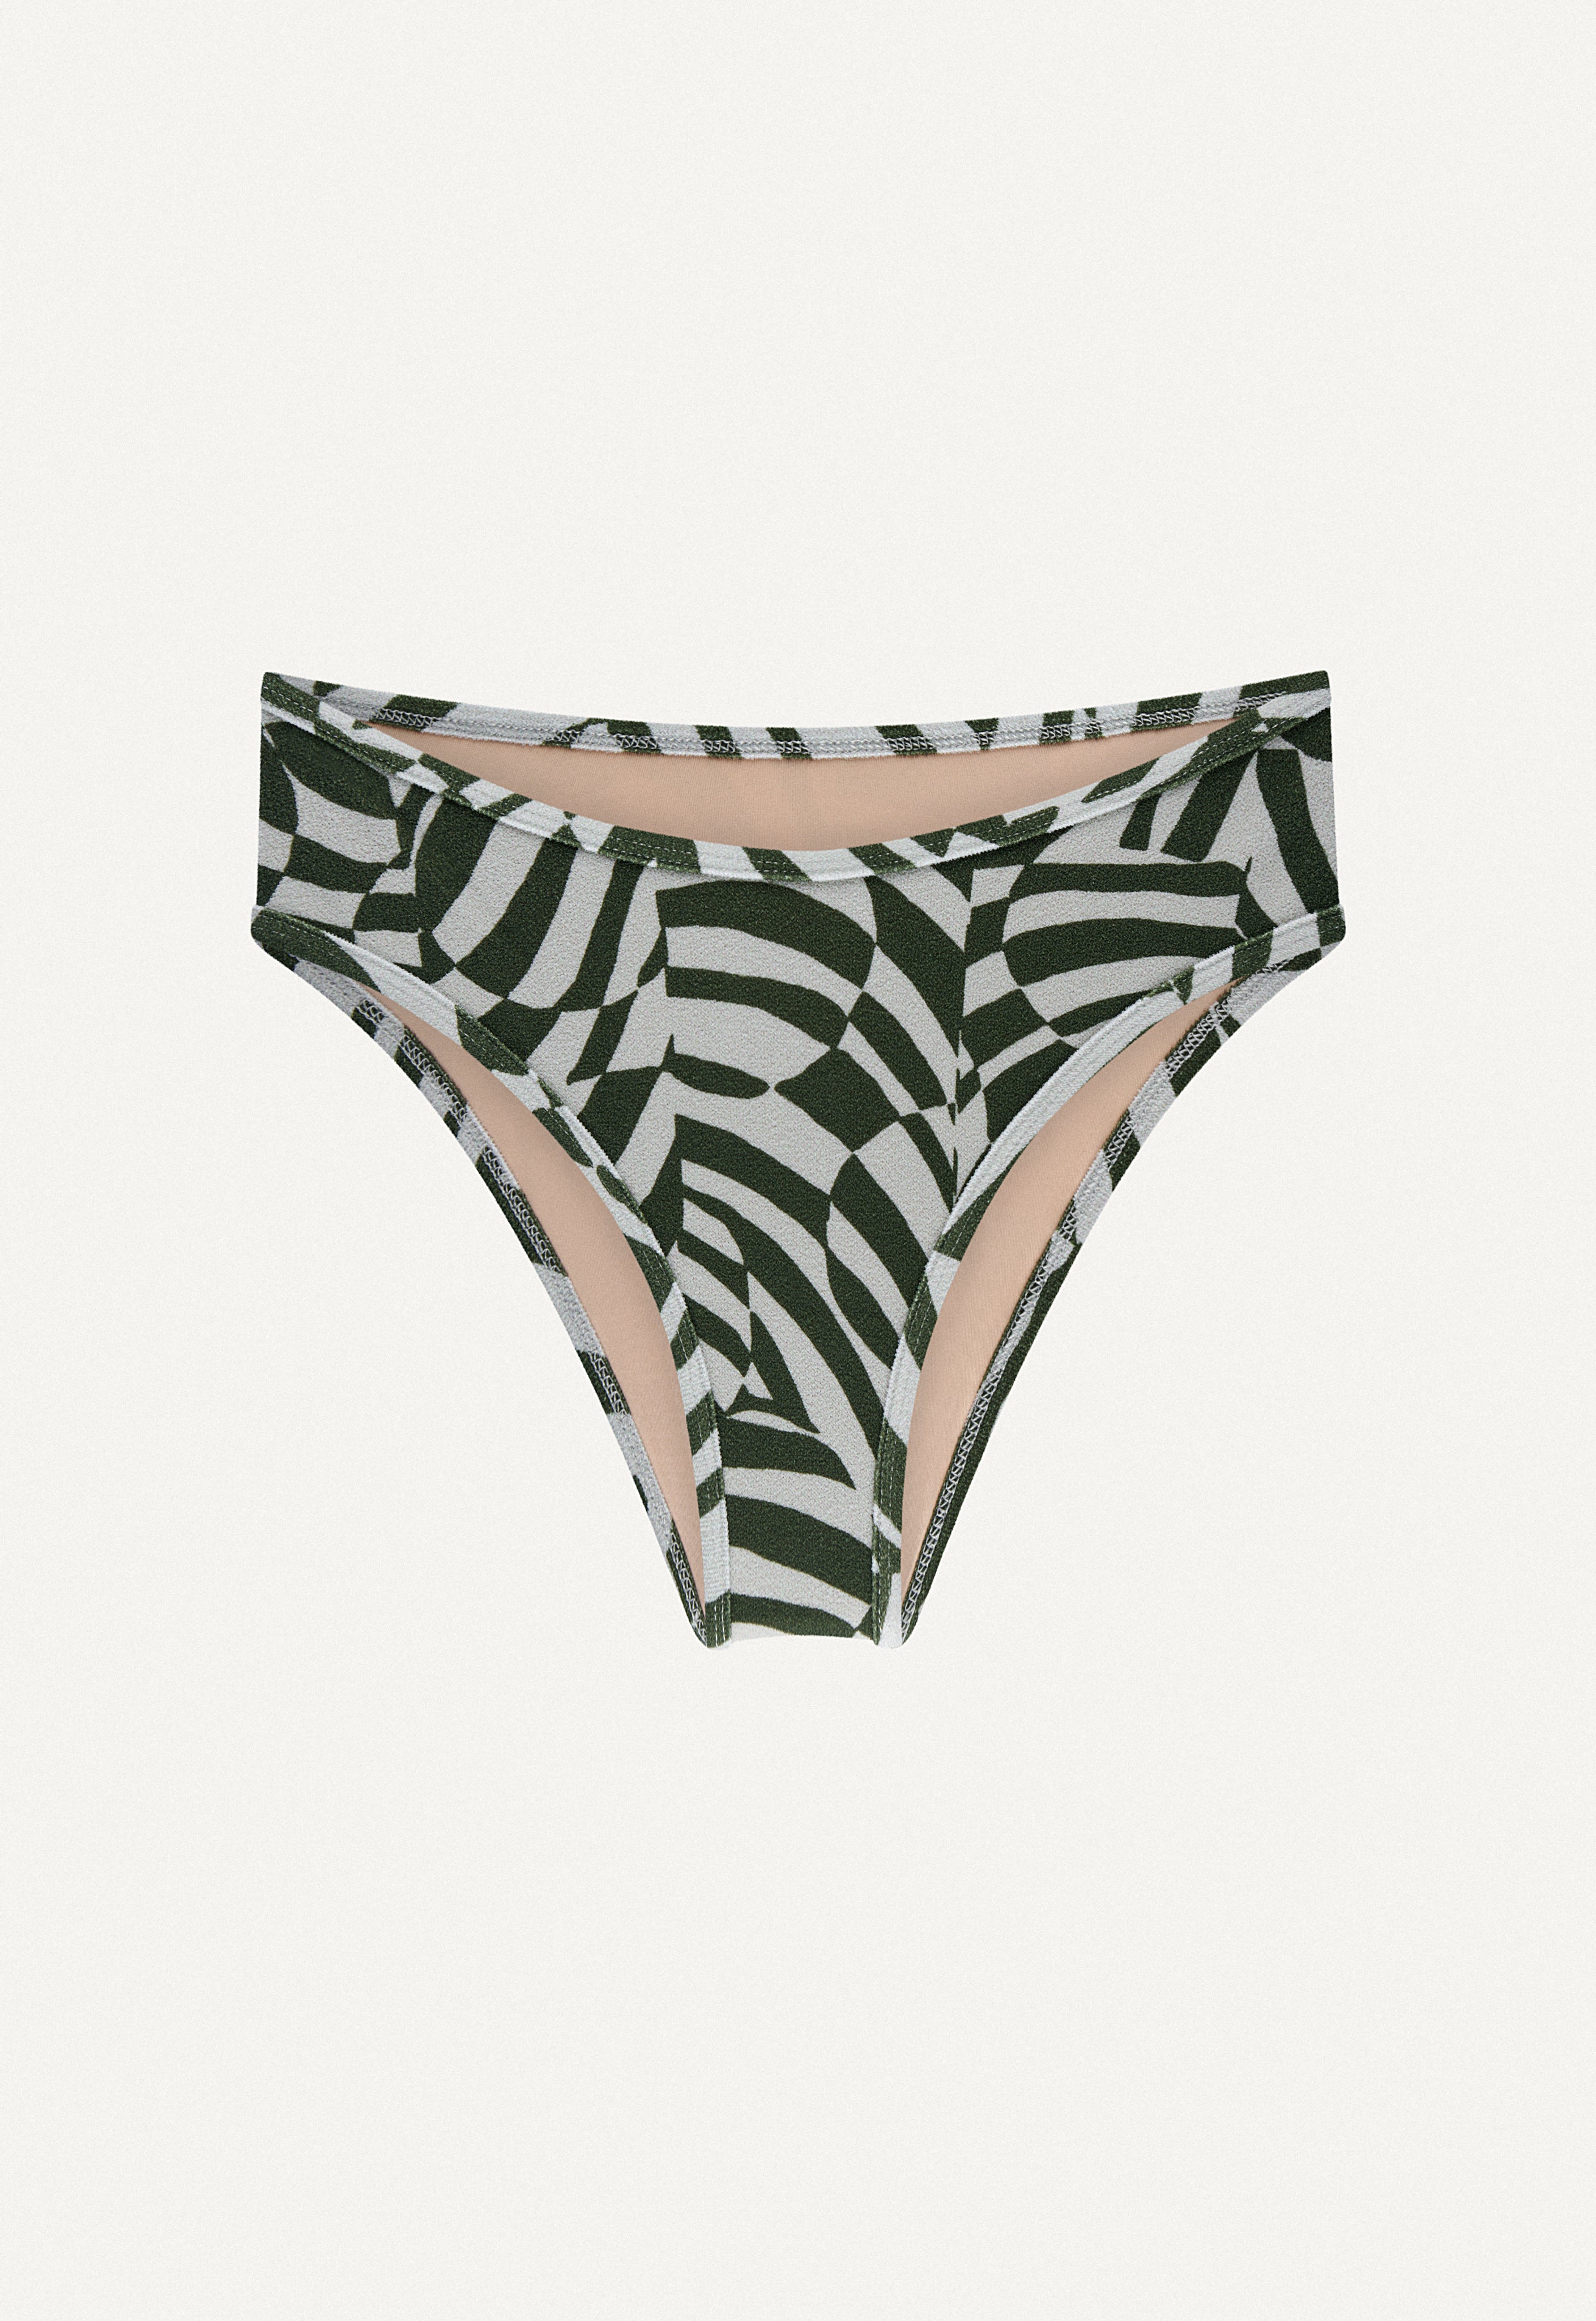 Oy-bikini-hose-A23-swimwear-Calima-zebra-print-frottee-front.jpg